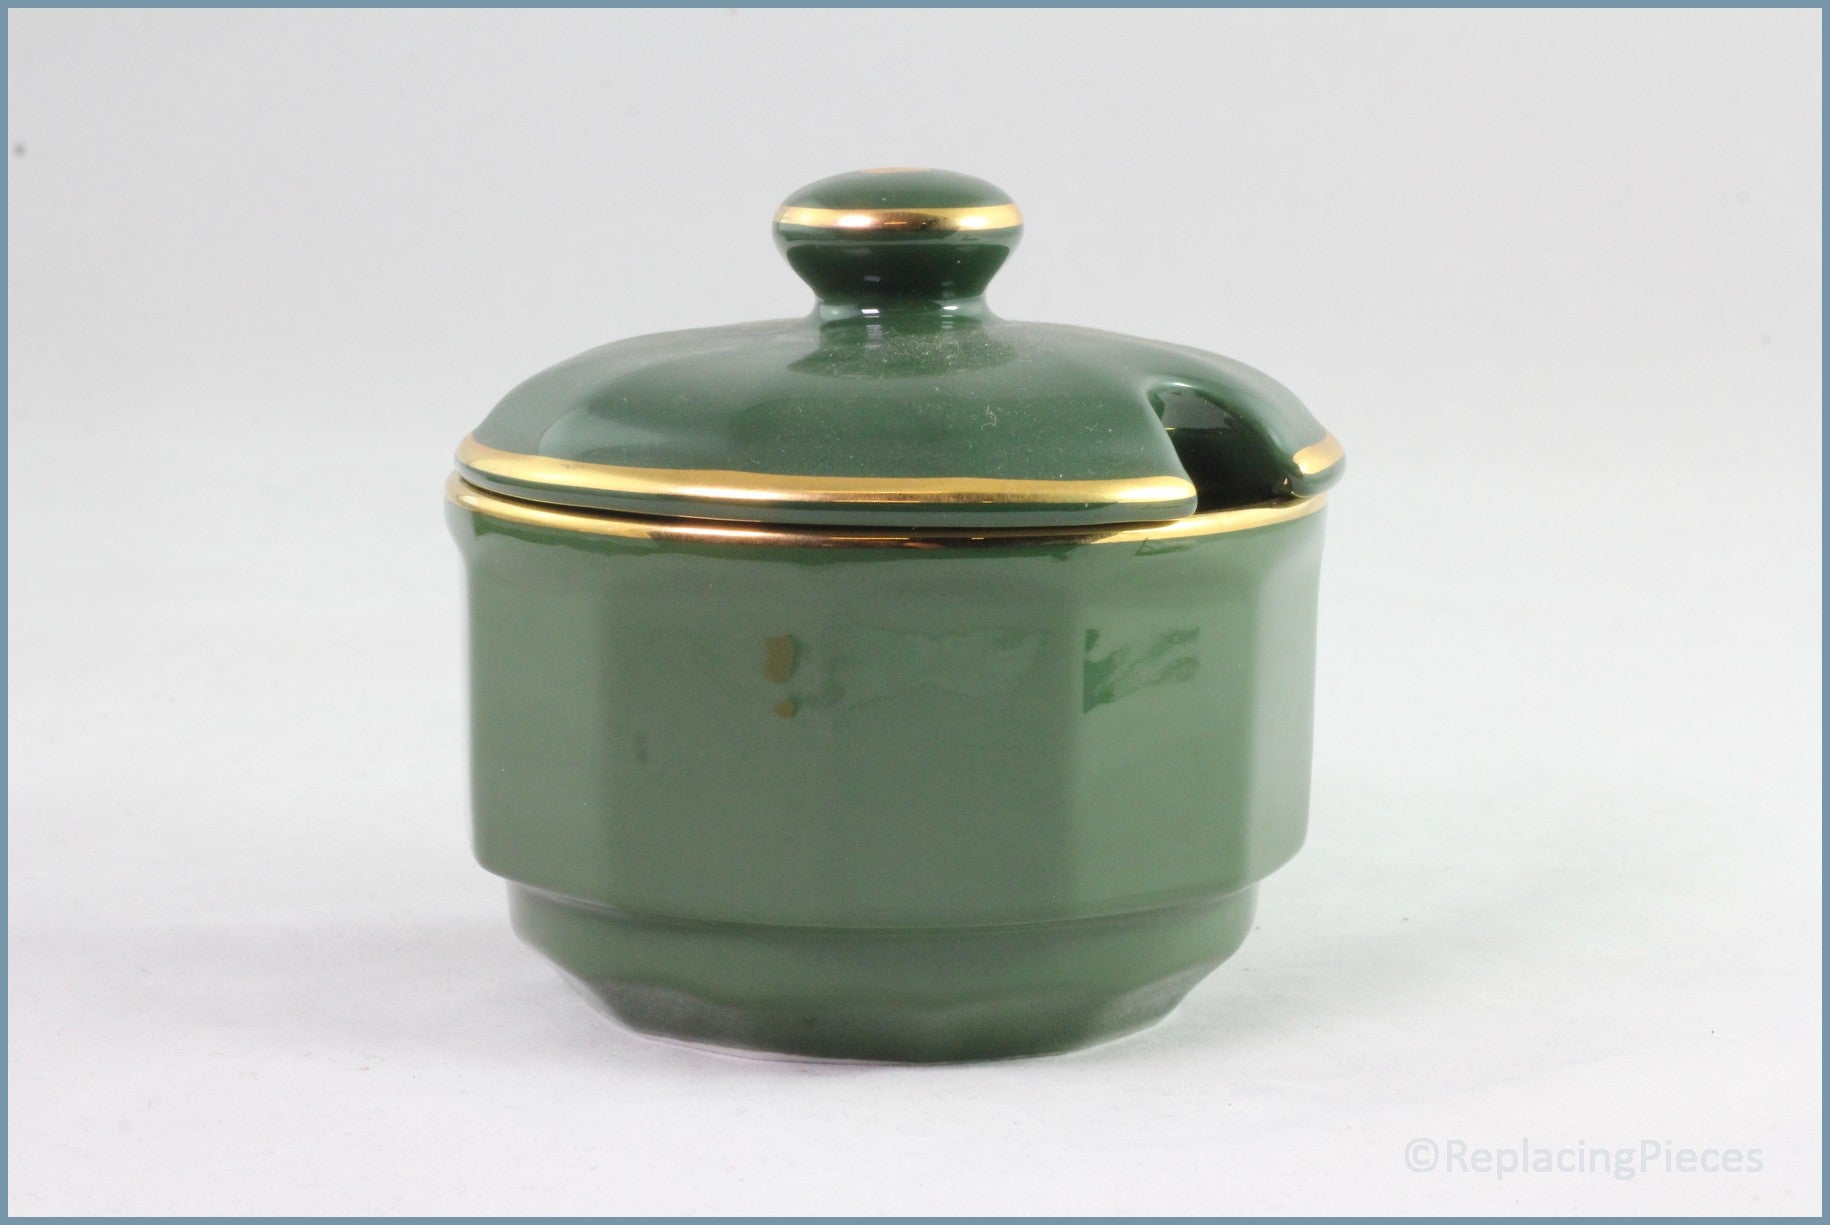 Apilco - Bistro (Green & Gold) - Lidded Sugar Bowl (Tea)